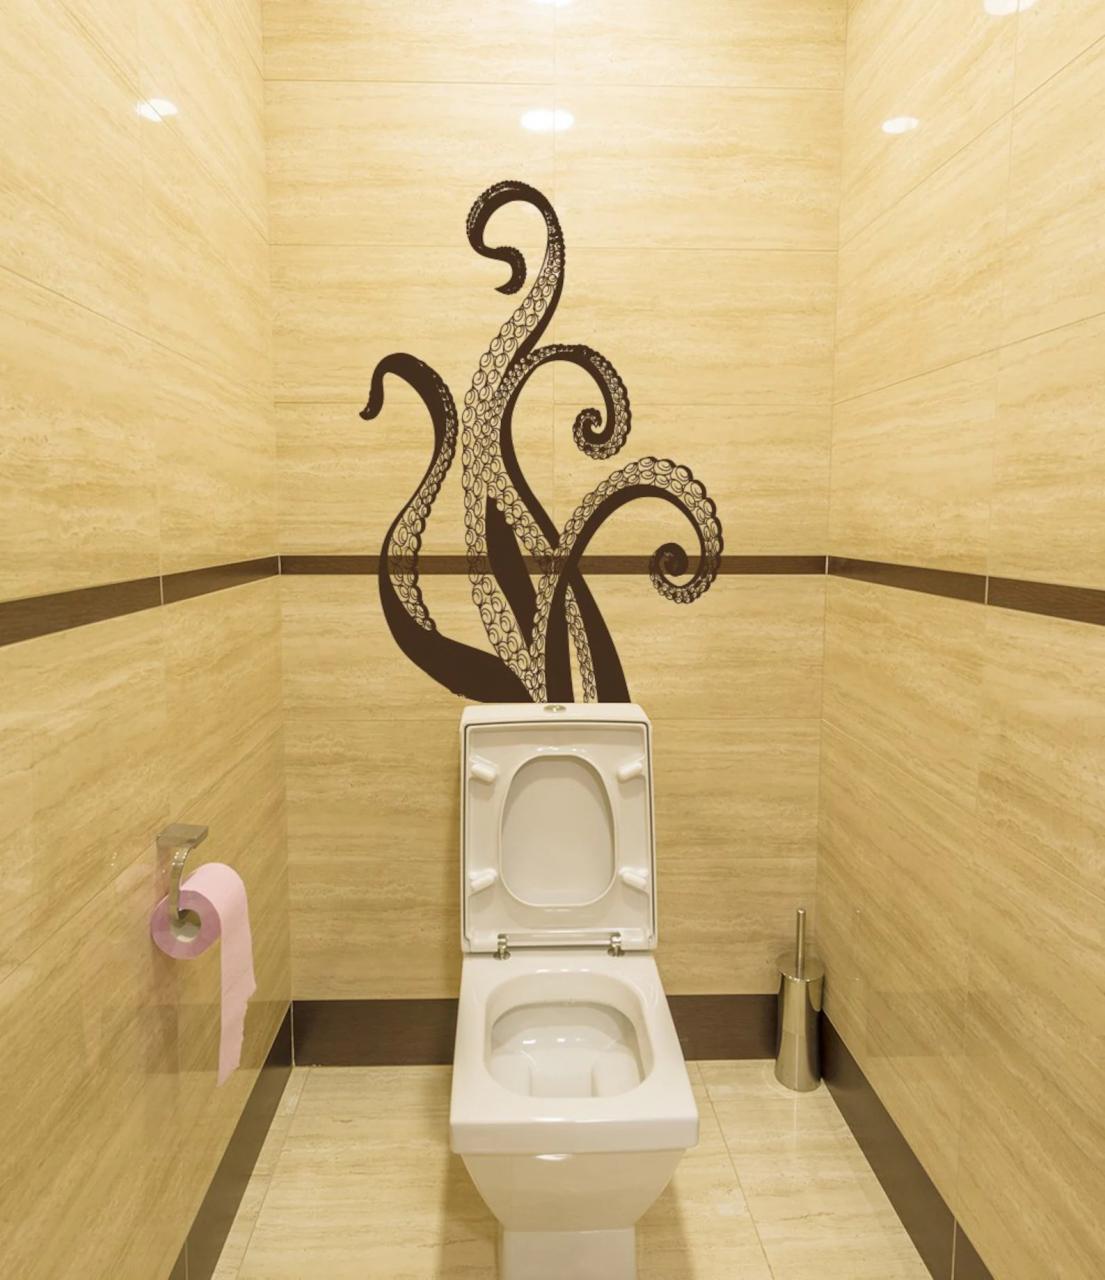 Octopus Wall Decal Bathroom Decor Toilet Decals Octopus Etsy